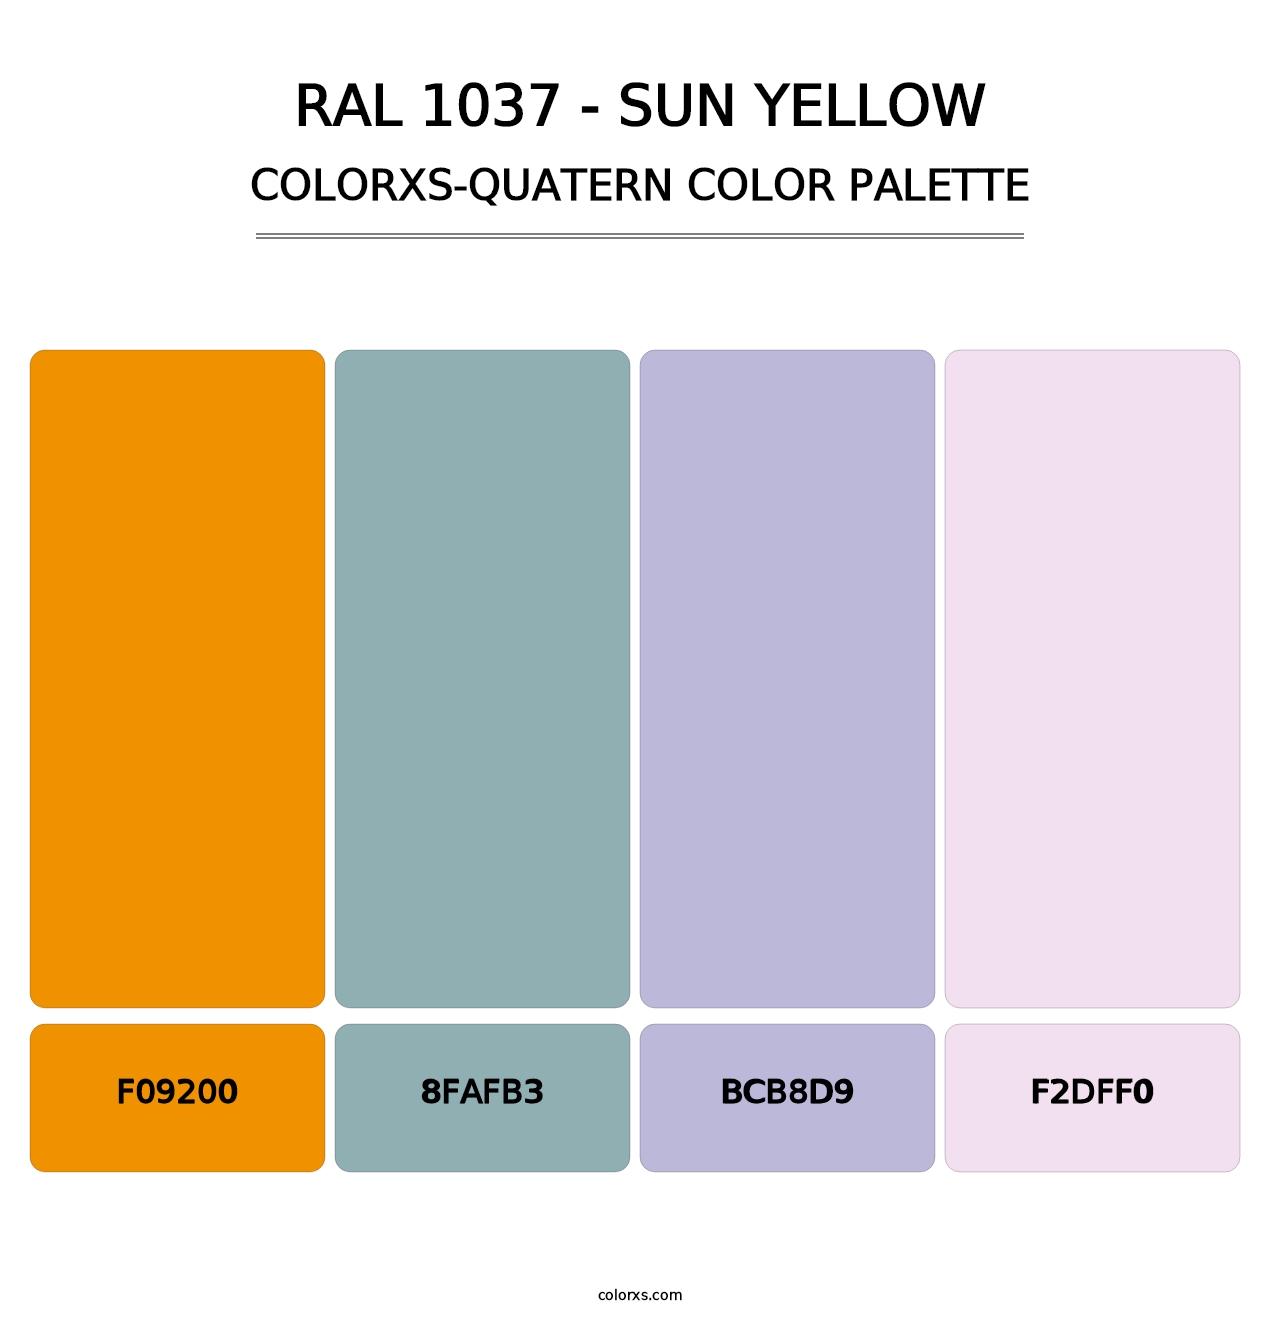 RAL 1037 - Sun Yellow - Colorxs Quatern Palette